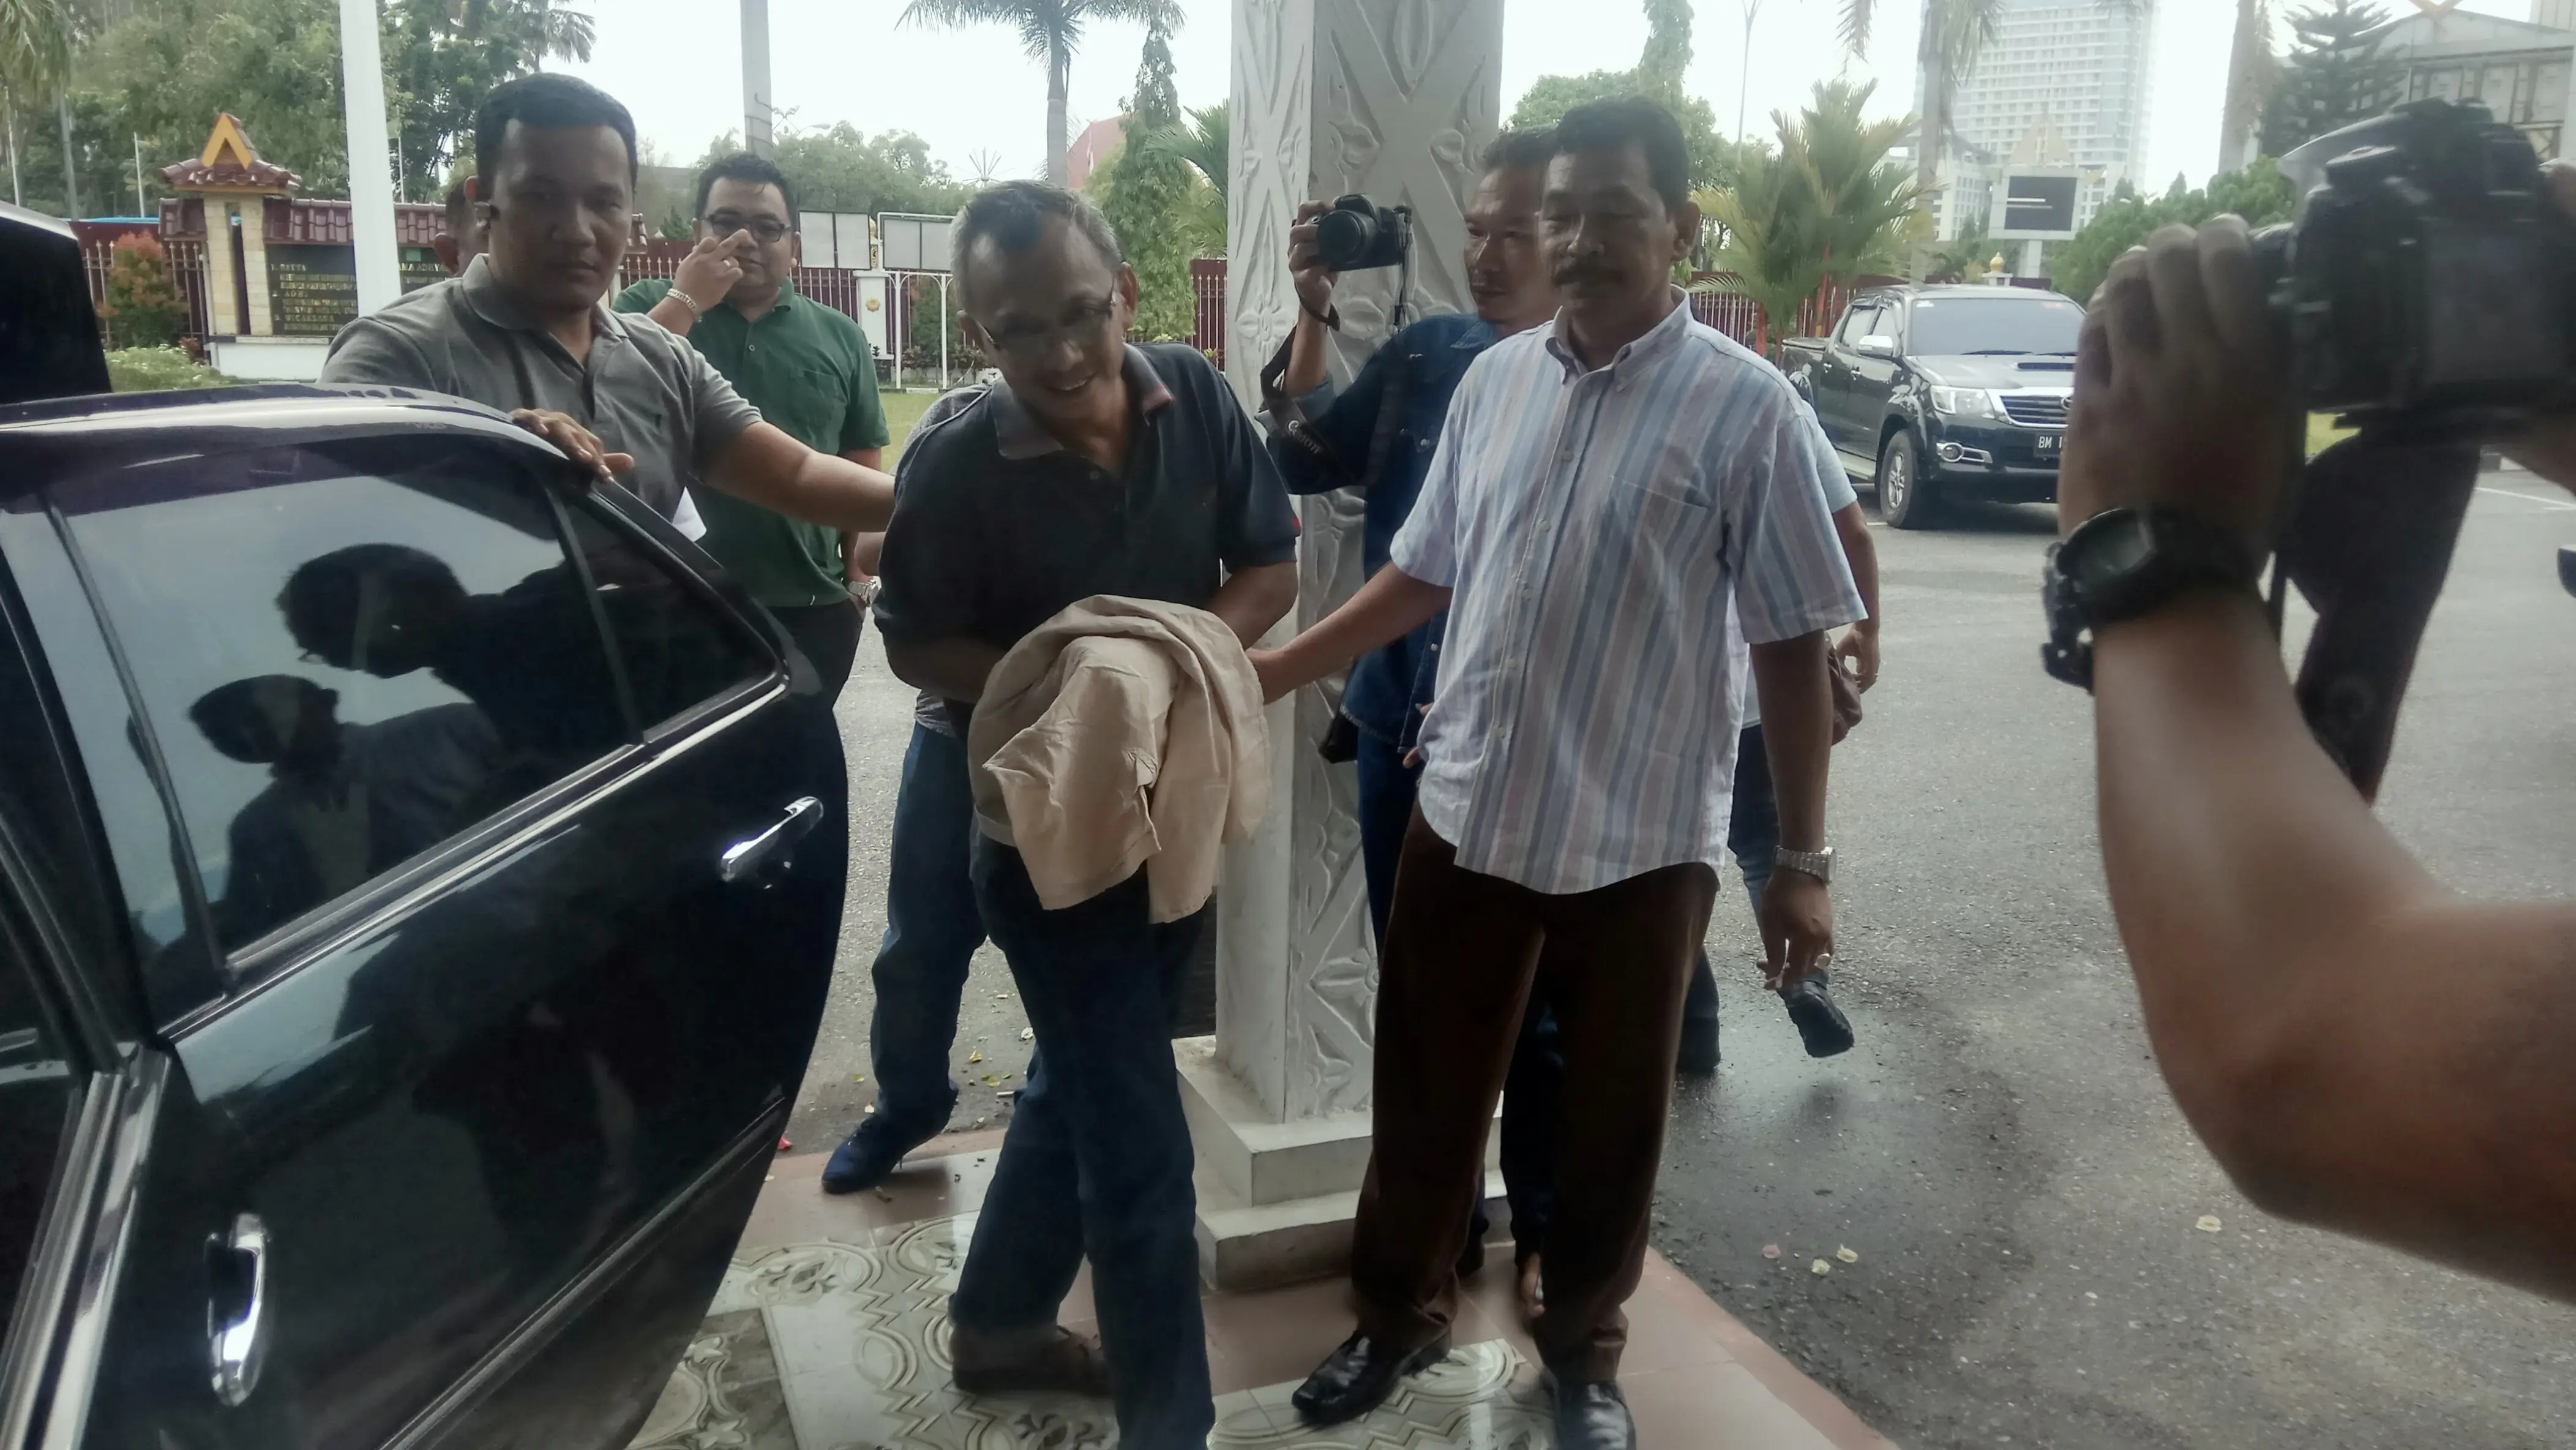 Penjual kopi yang ditangkap Kejaksaan Tinggi Riau itu sudah dinyatakan buron sejak November 2017 setelah namanya disebut di persidangan kasus korupsi. (Liputan6.com/M Syukur)